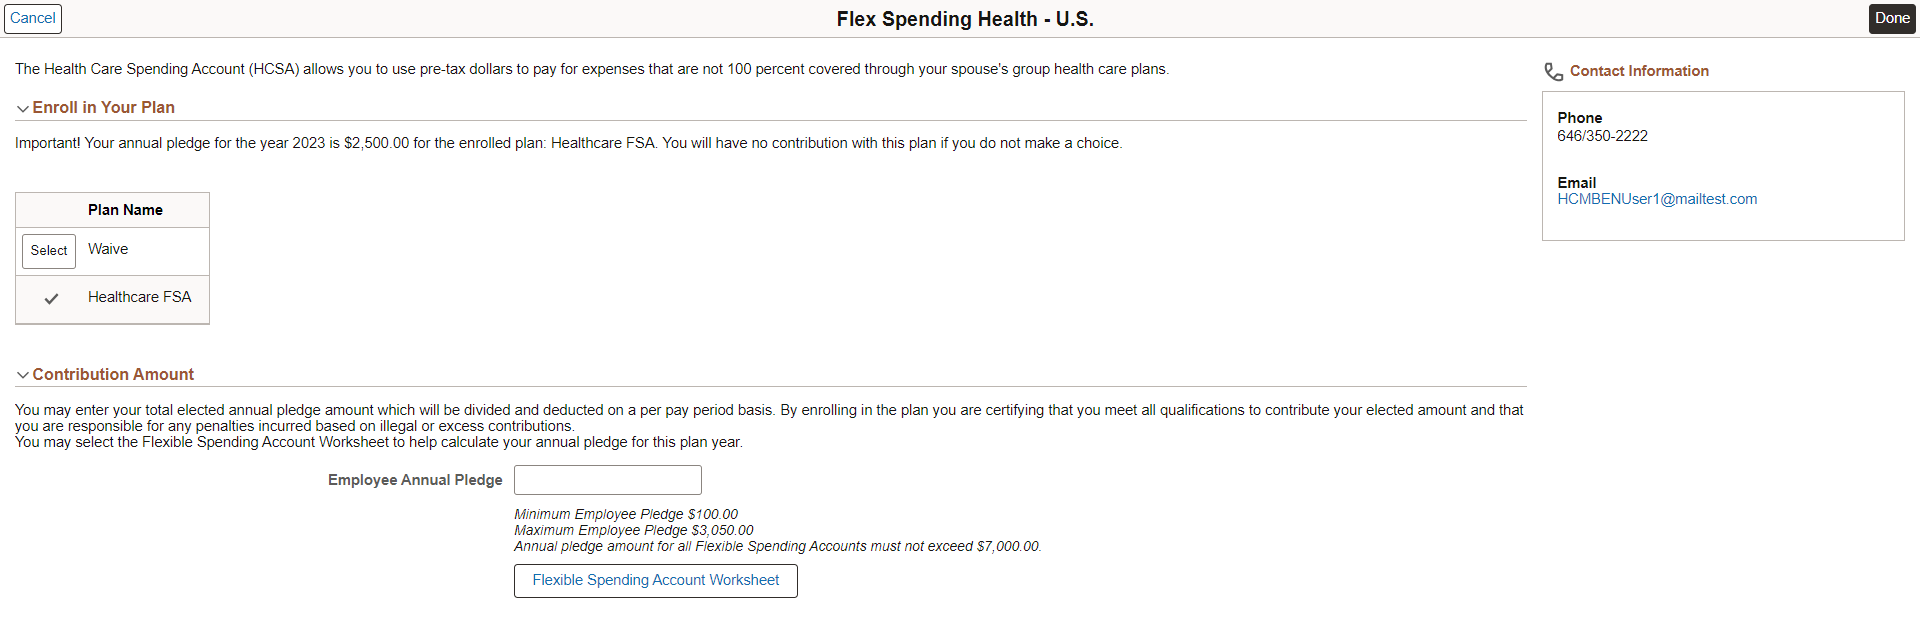 Flex Spending Health_US Page